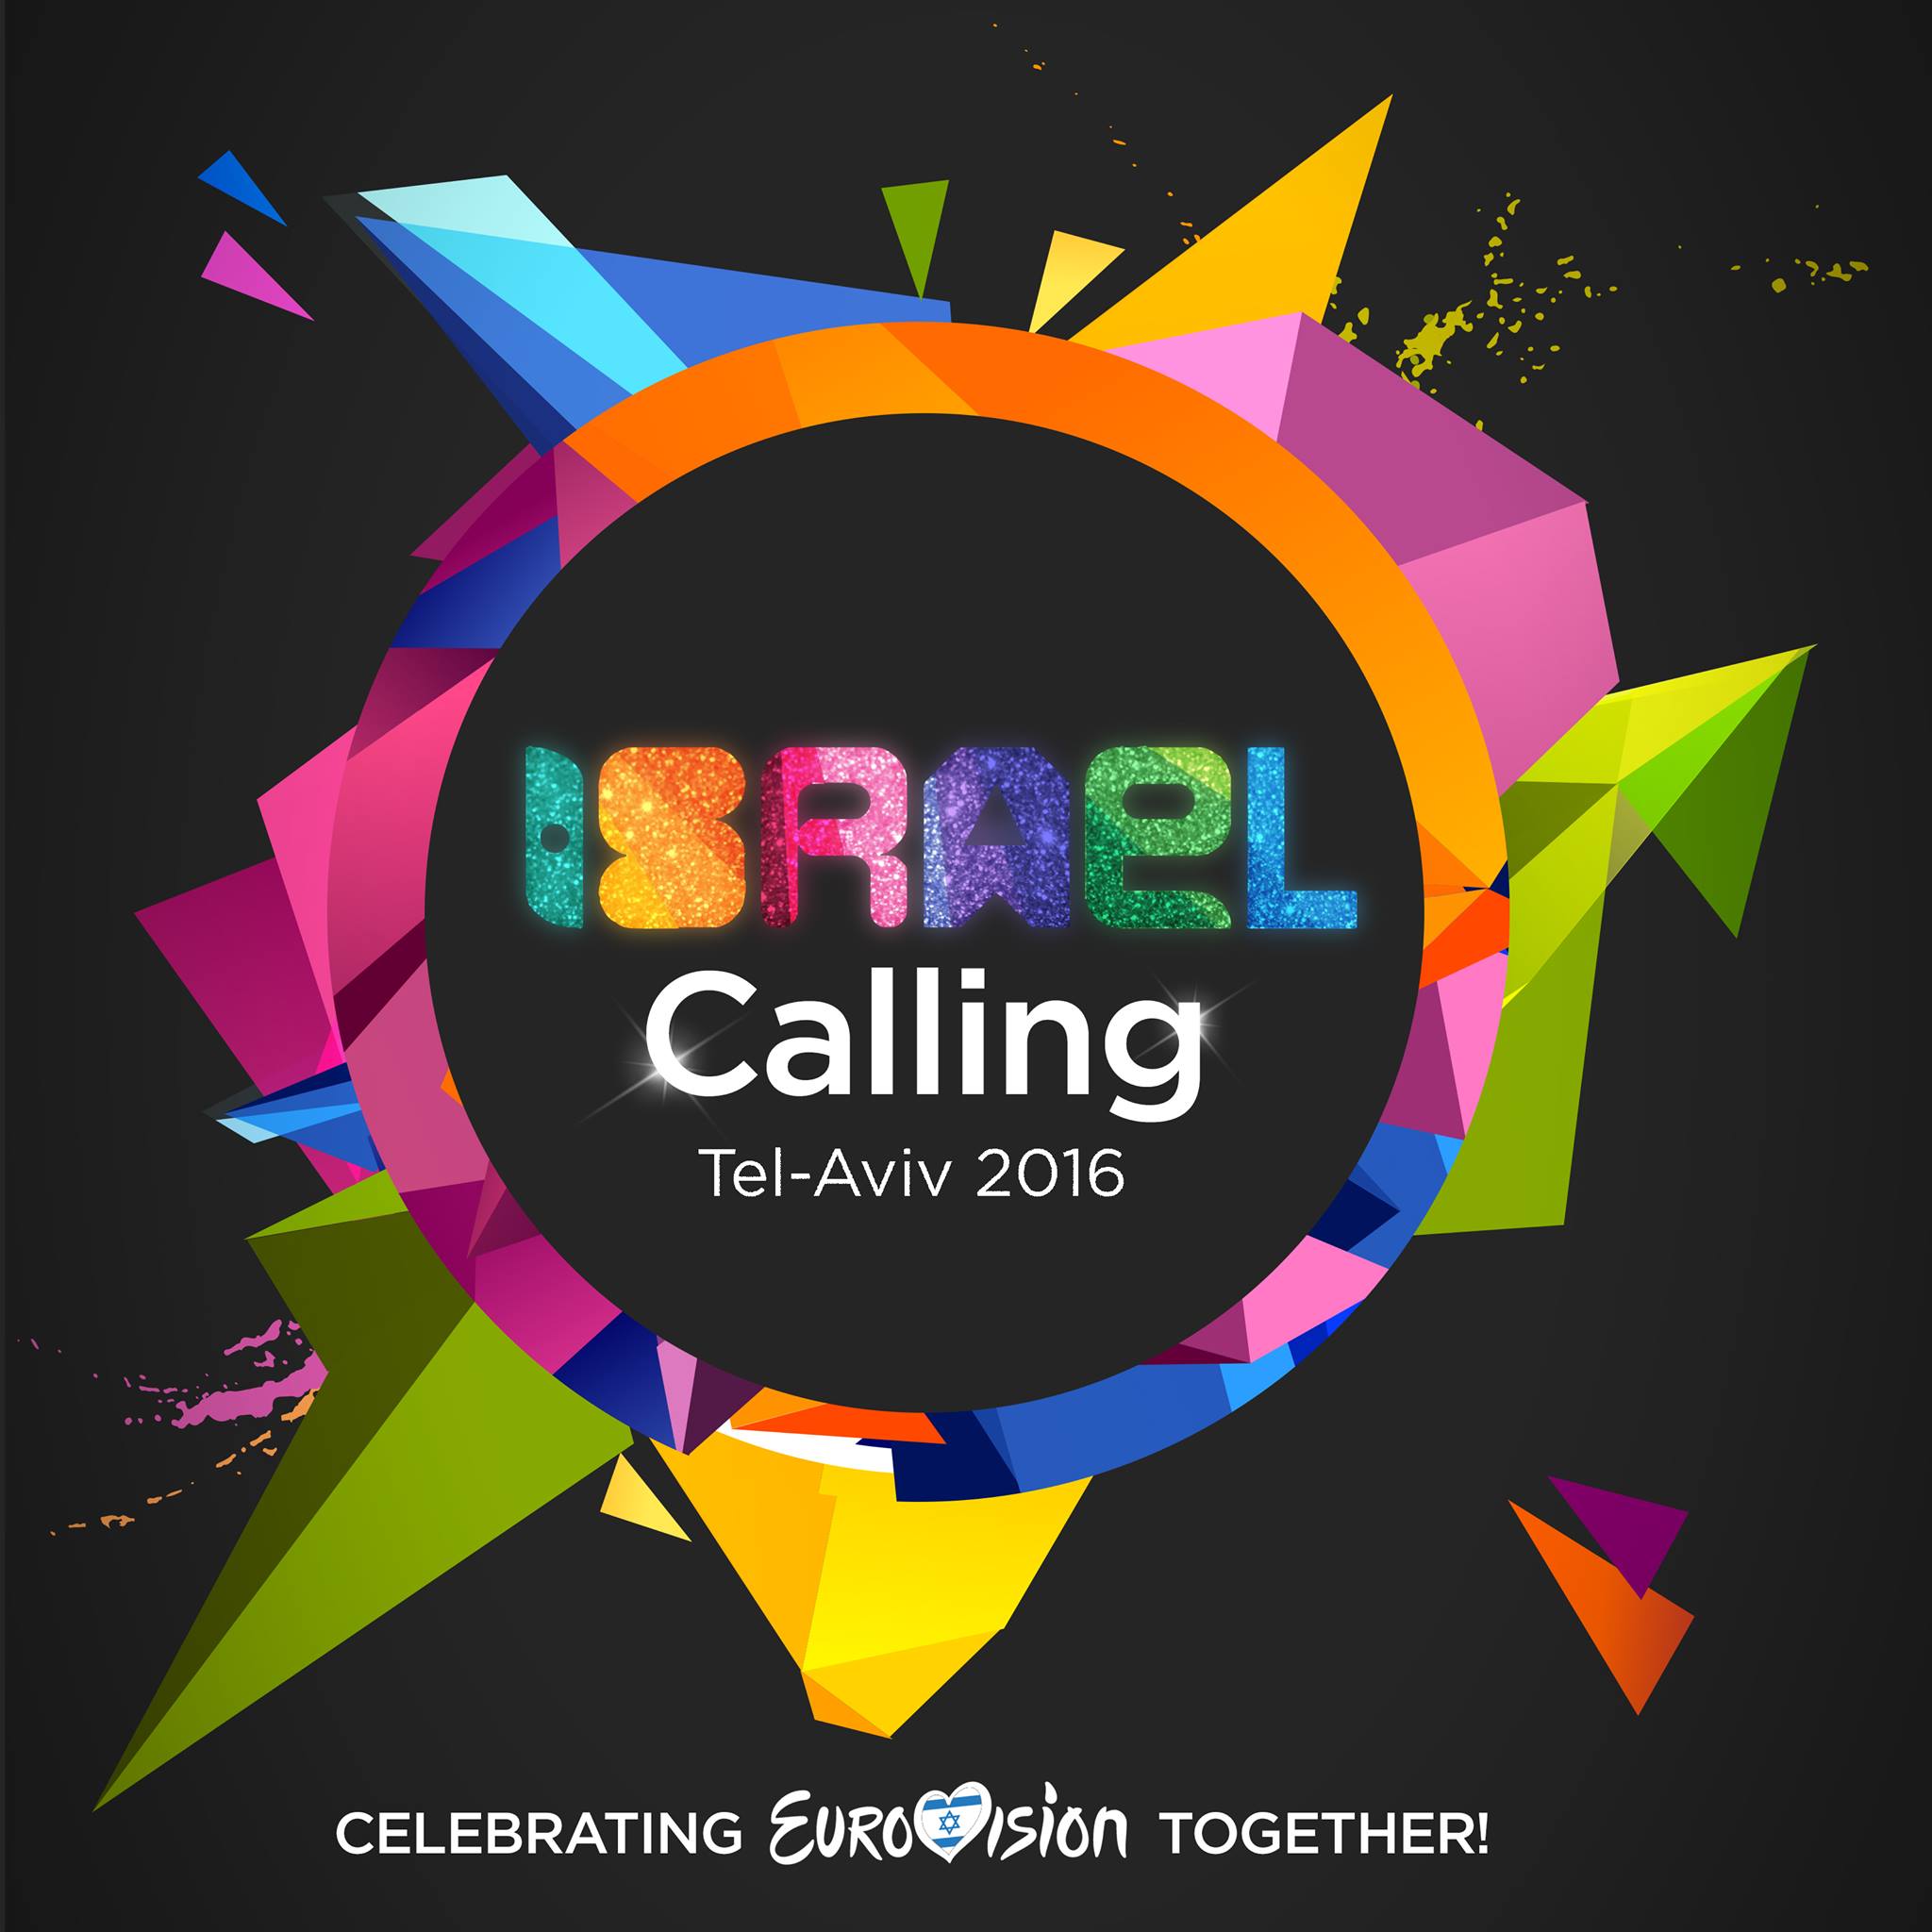 Ce mardi : Israel Calling